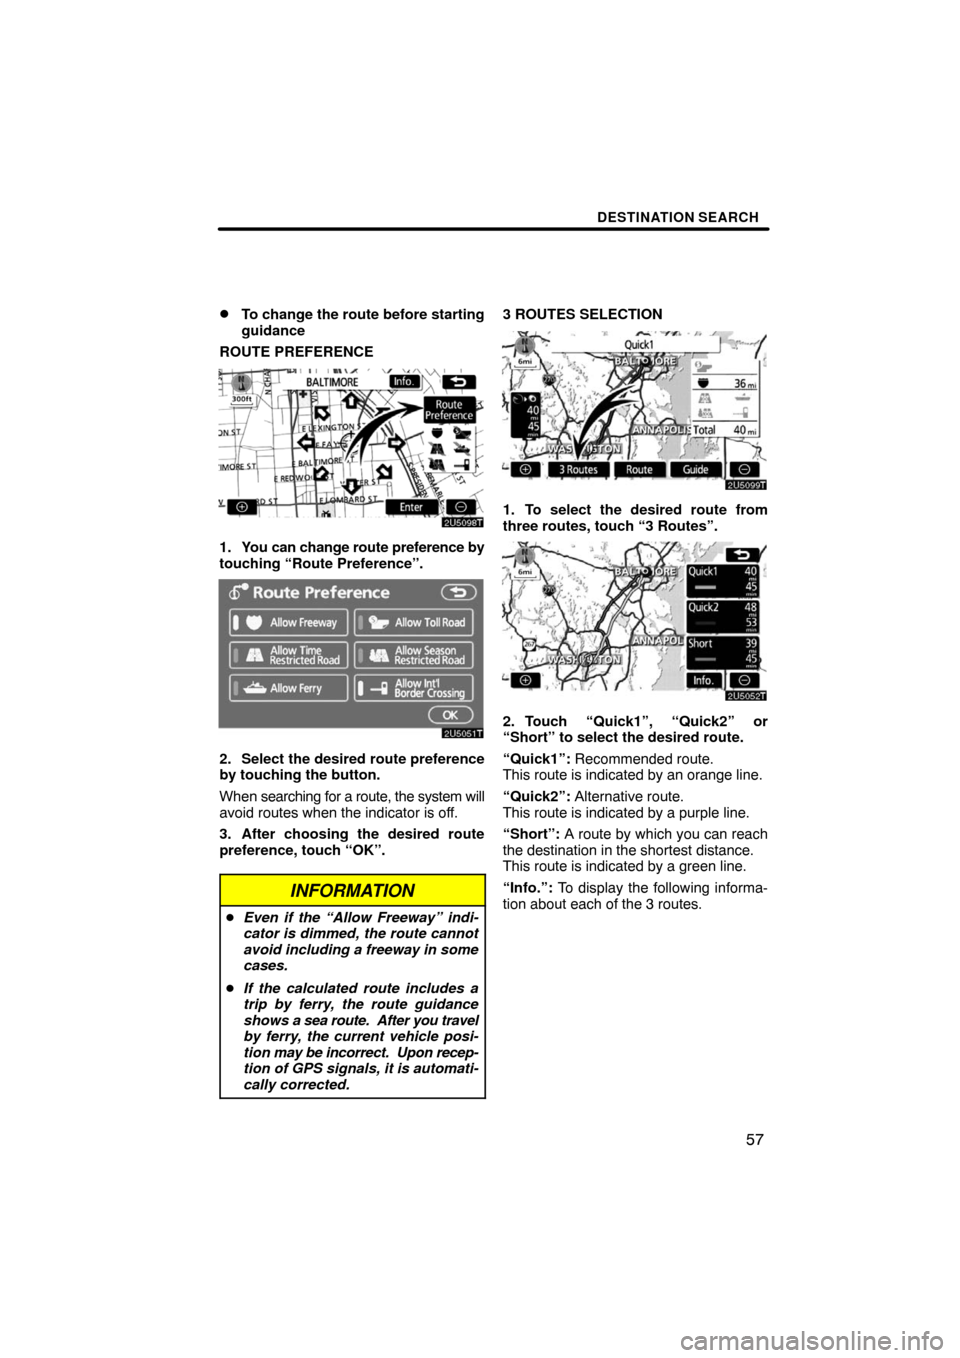 TOYOTA PRIUS 2008 2.G Navigation Manual DESTINATION SEARCH
57 
To change the route before starting
guidance
ROUTE PREFERENCE
1. You can change route preference by
touching “Route Preference”.
2. Select the desired route preference
by t